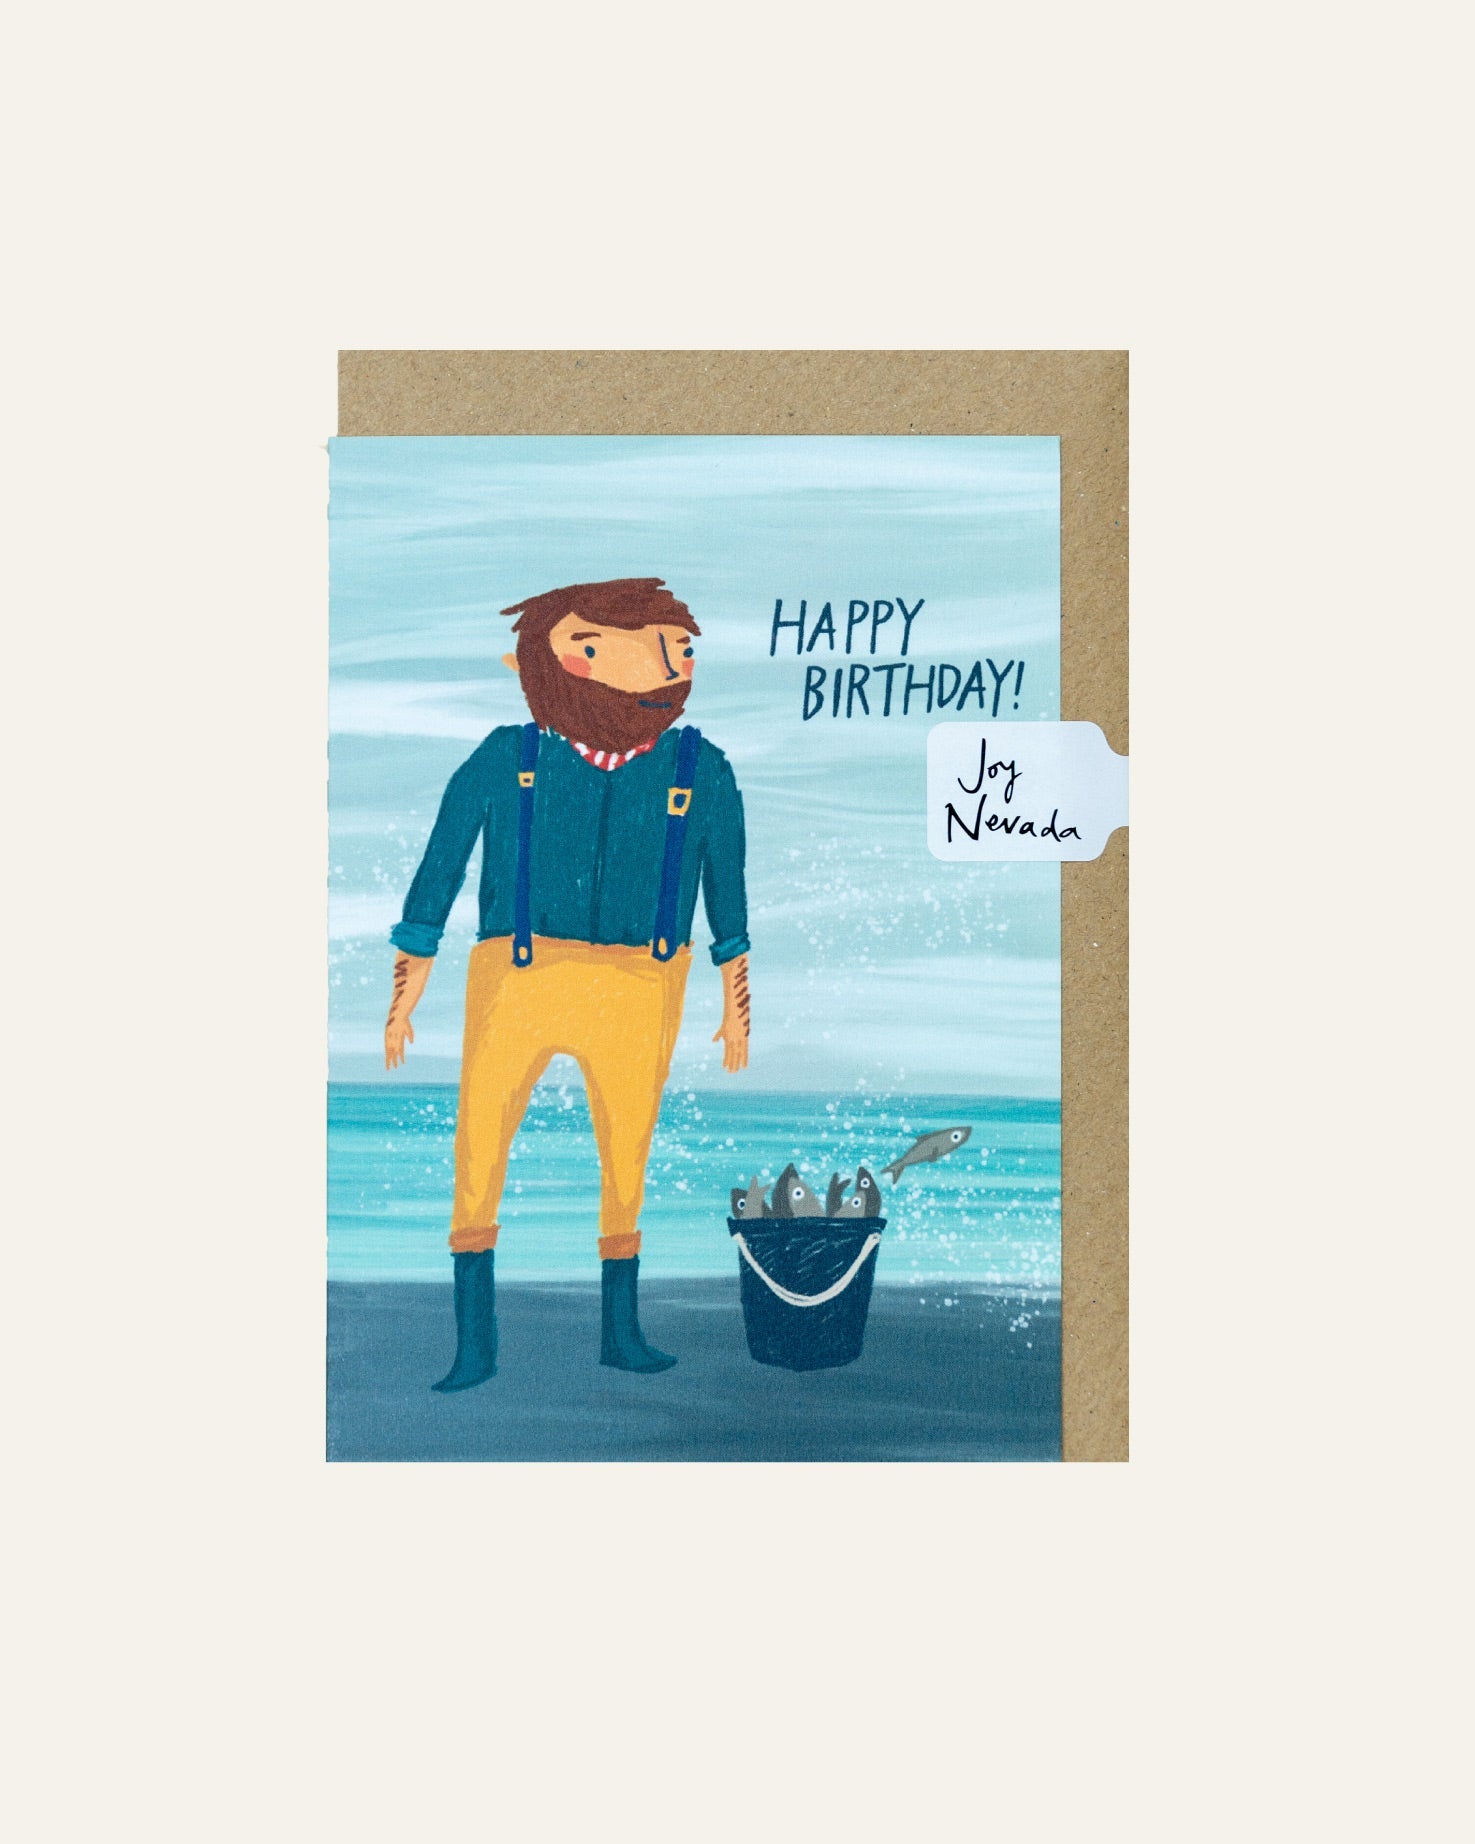 Happy Birthday Fisherman Card by Joy Nevada - Hidden Scotland